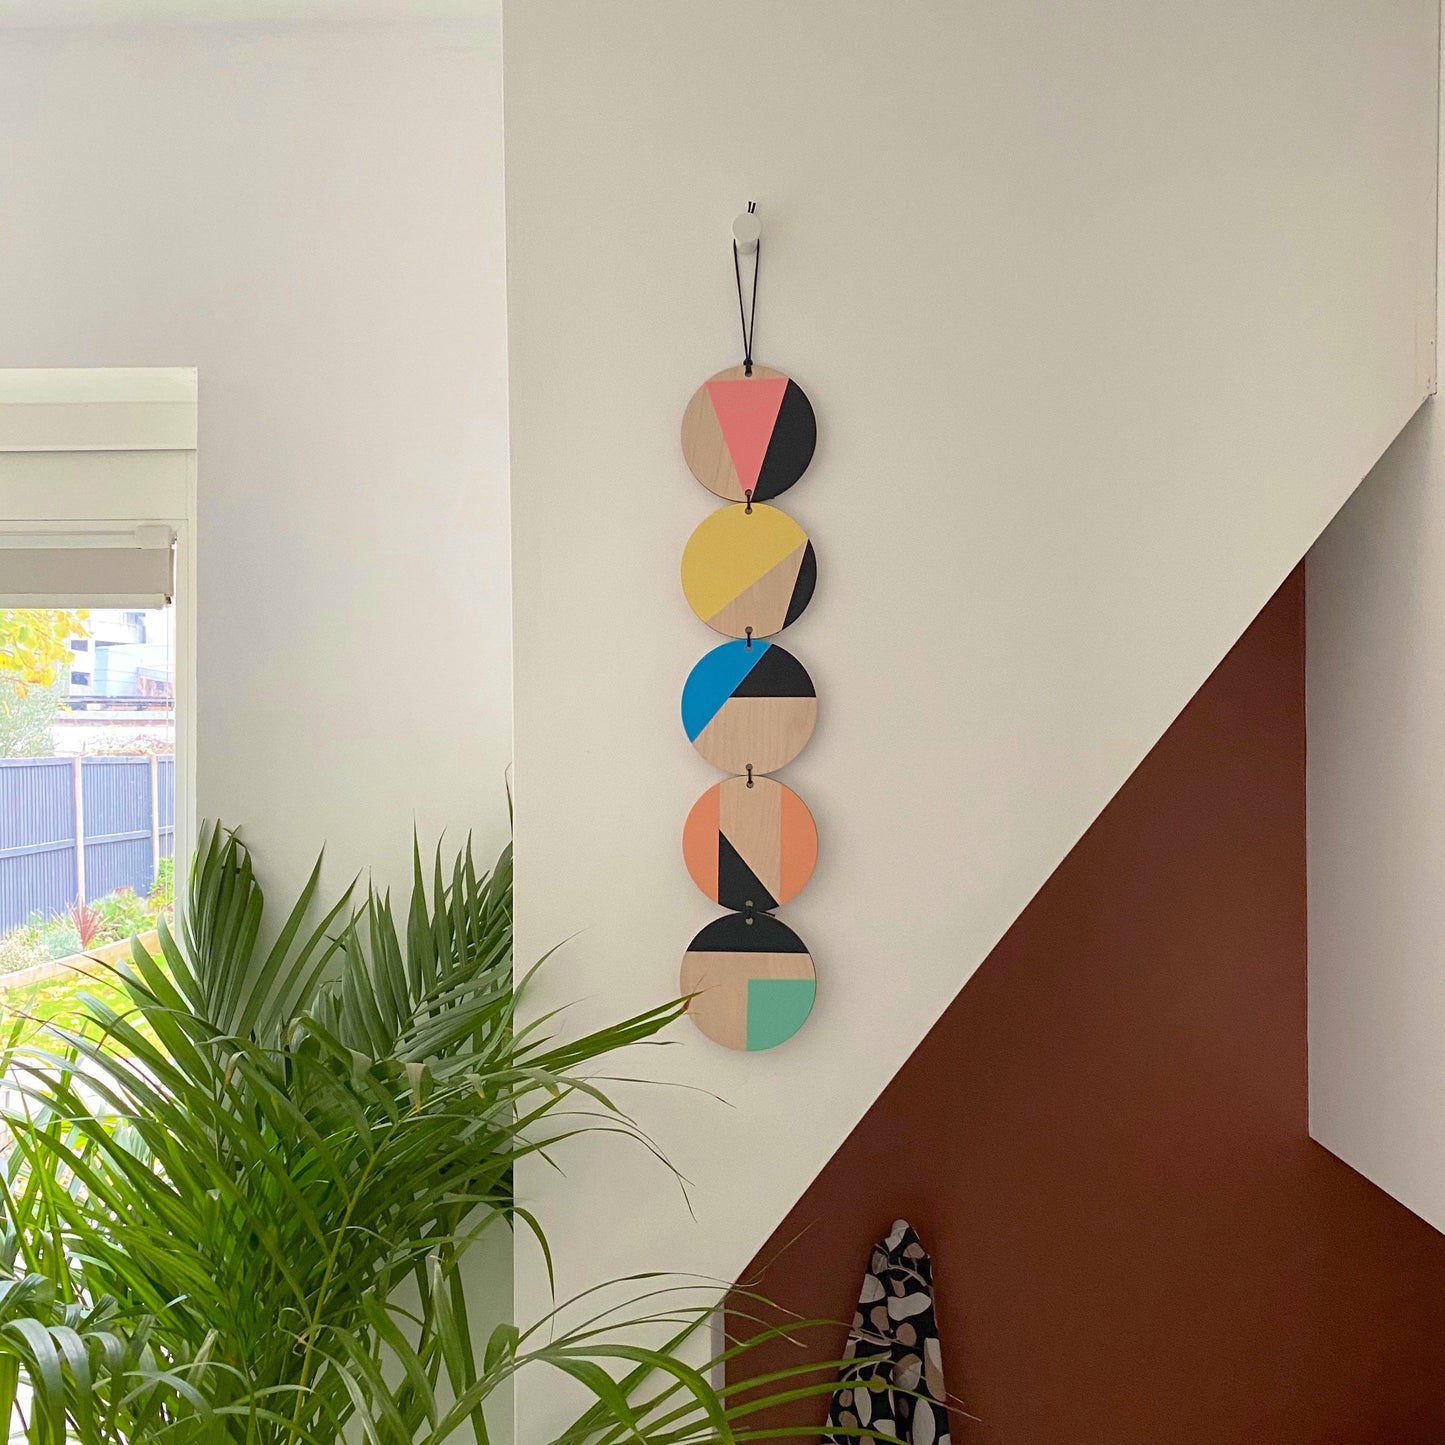 Wall hanging - Colourful Geometric Art - Plywood Decor - Scandi Hygge Boho - Wall Hanging - WallArt multi - Bright Retro Colours - 80s style